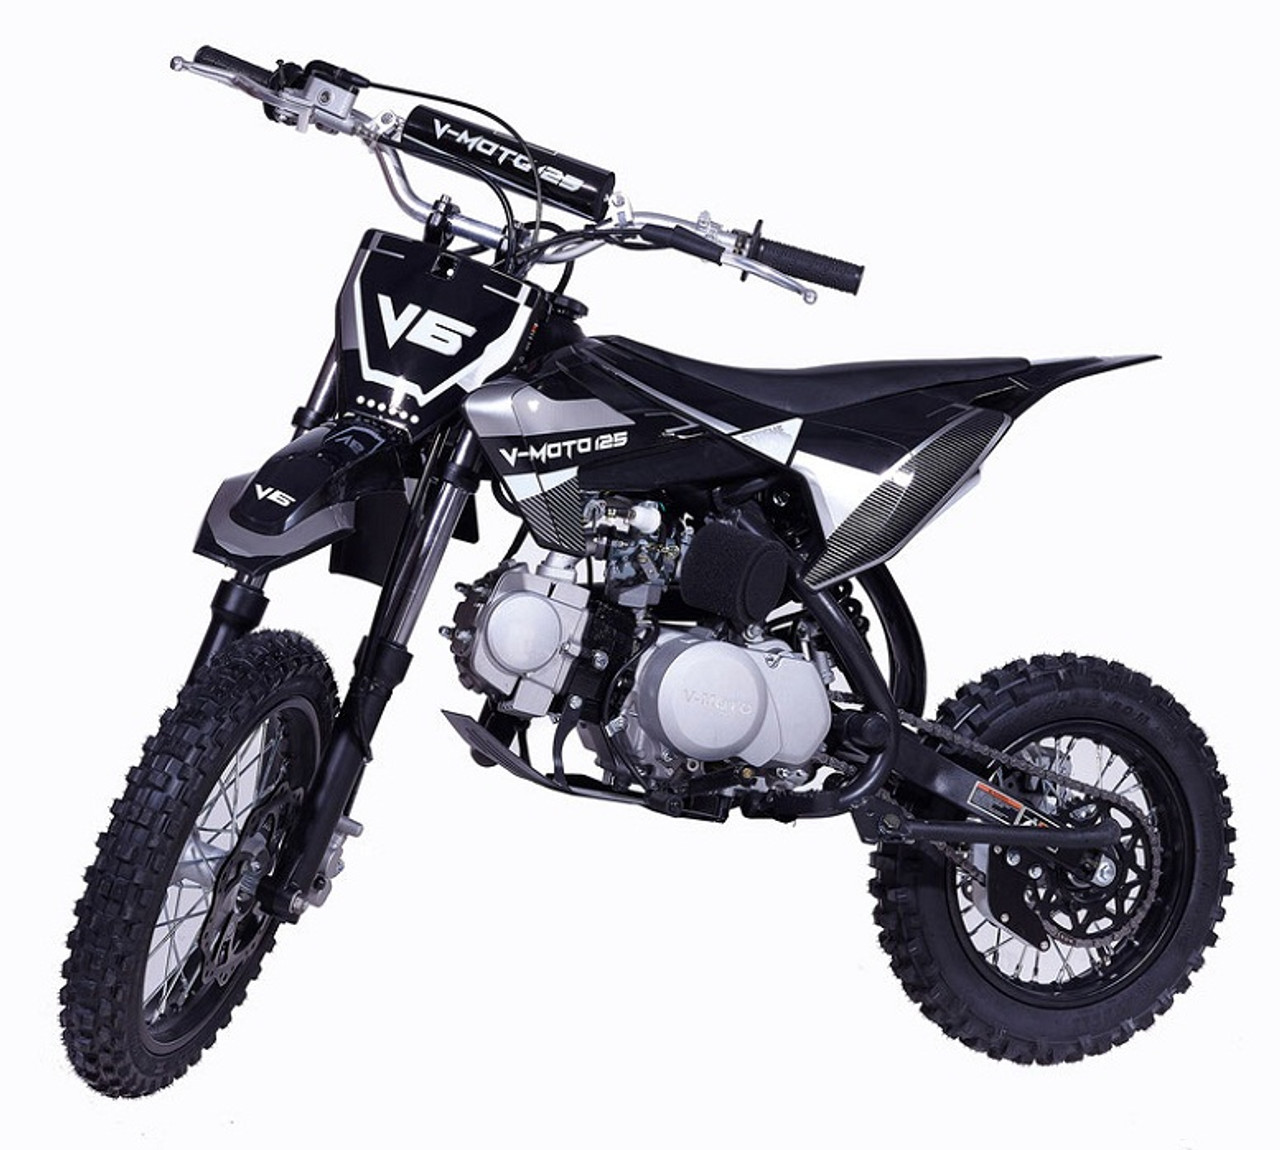 VITACCI DB-V6 125cc Dirt Bike, Kick Start, Single Cylinder, 4-Stroke, Air Cooled - BLACK